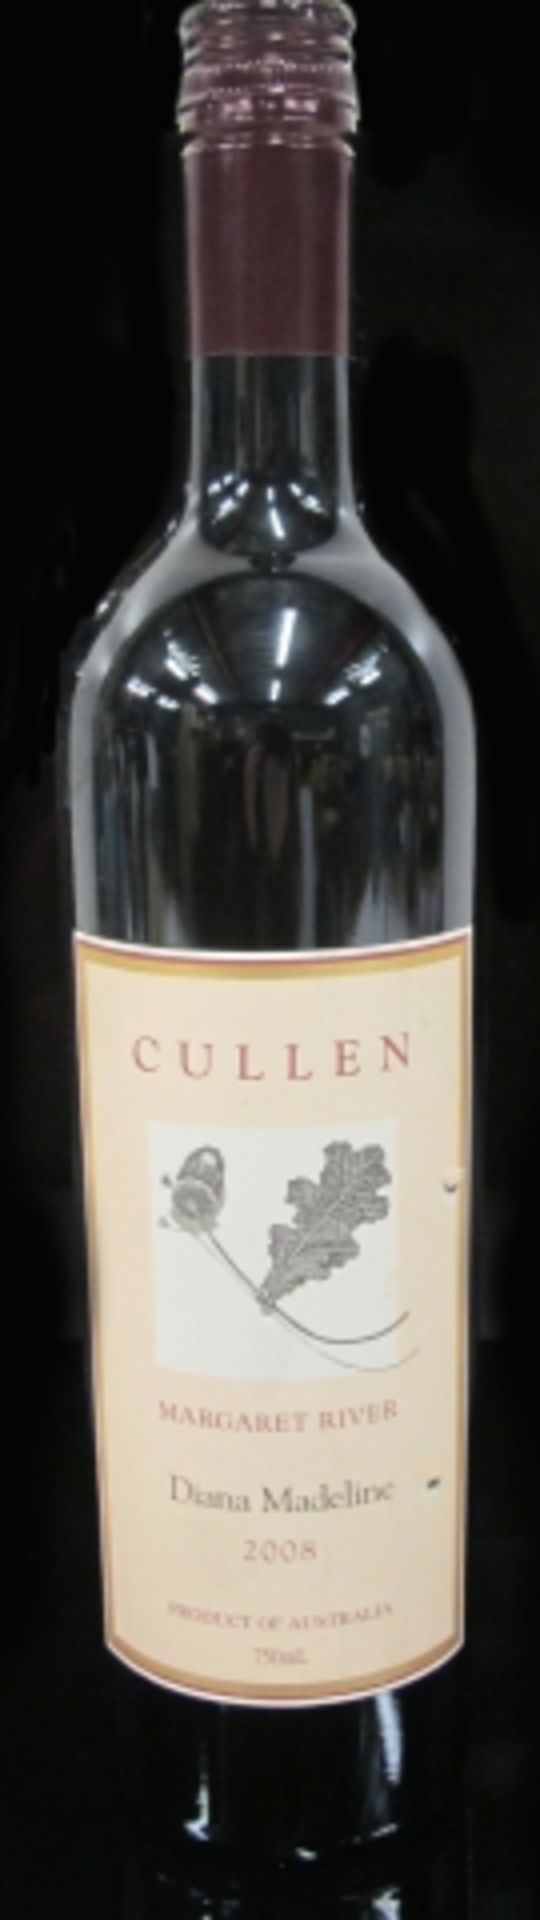 2008 Cullen Diana Madeline, Grape Variety Cabernet Sauvignon (86%), Merlot (14%), ABV 12%, Region